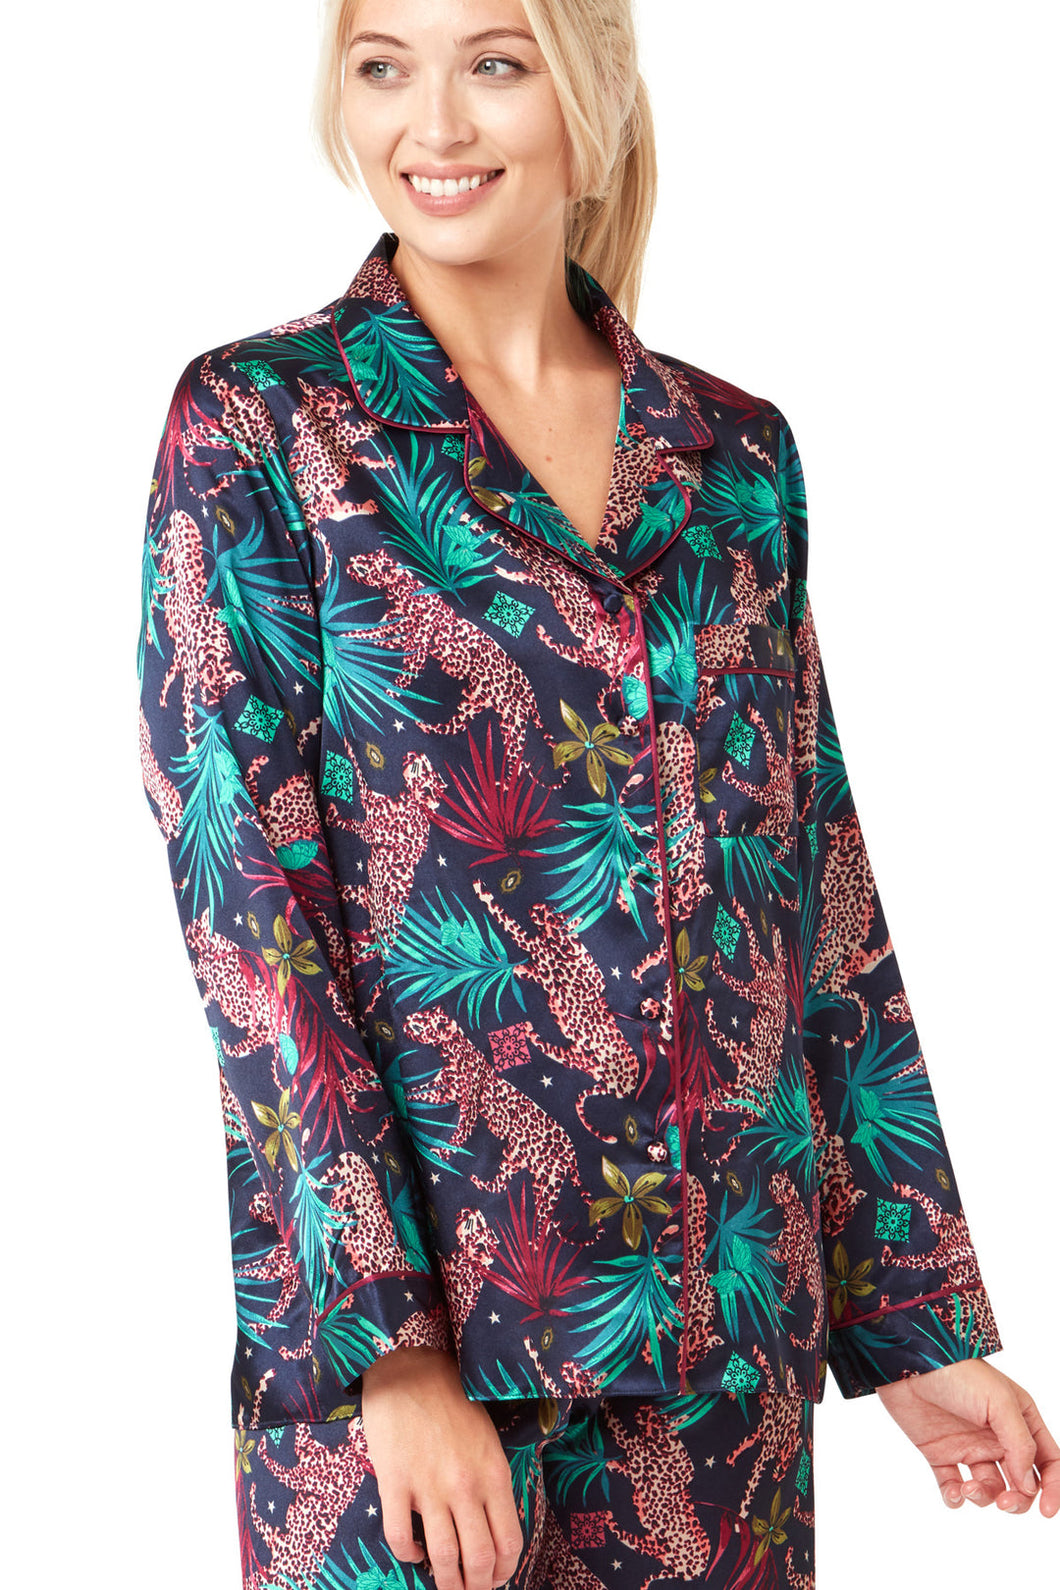 INDIGO SKY <BR>
Jungle Cheetah Print Revere Collar Pyjama Set <BR>
Navy or Raspberry Print <BR>